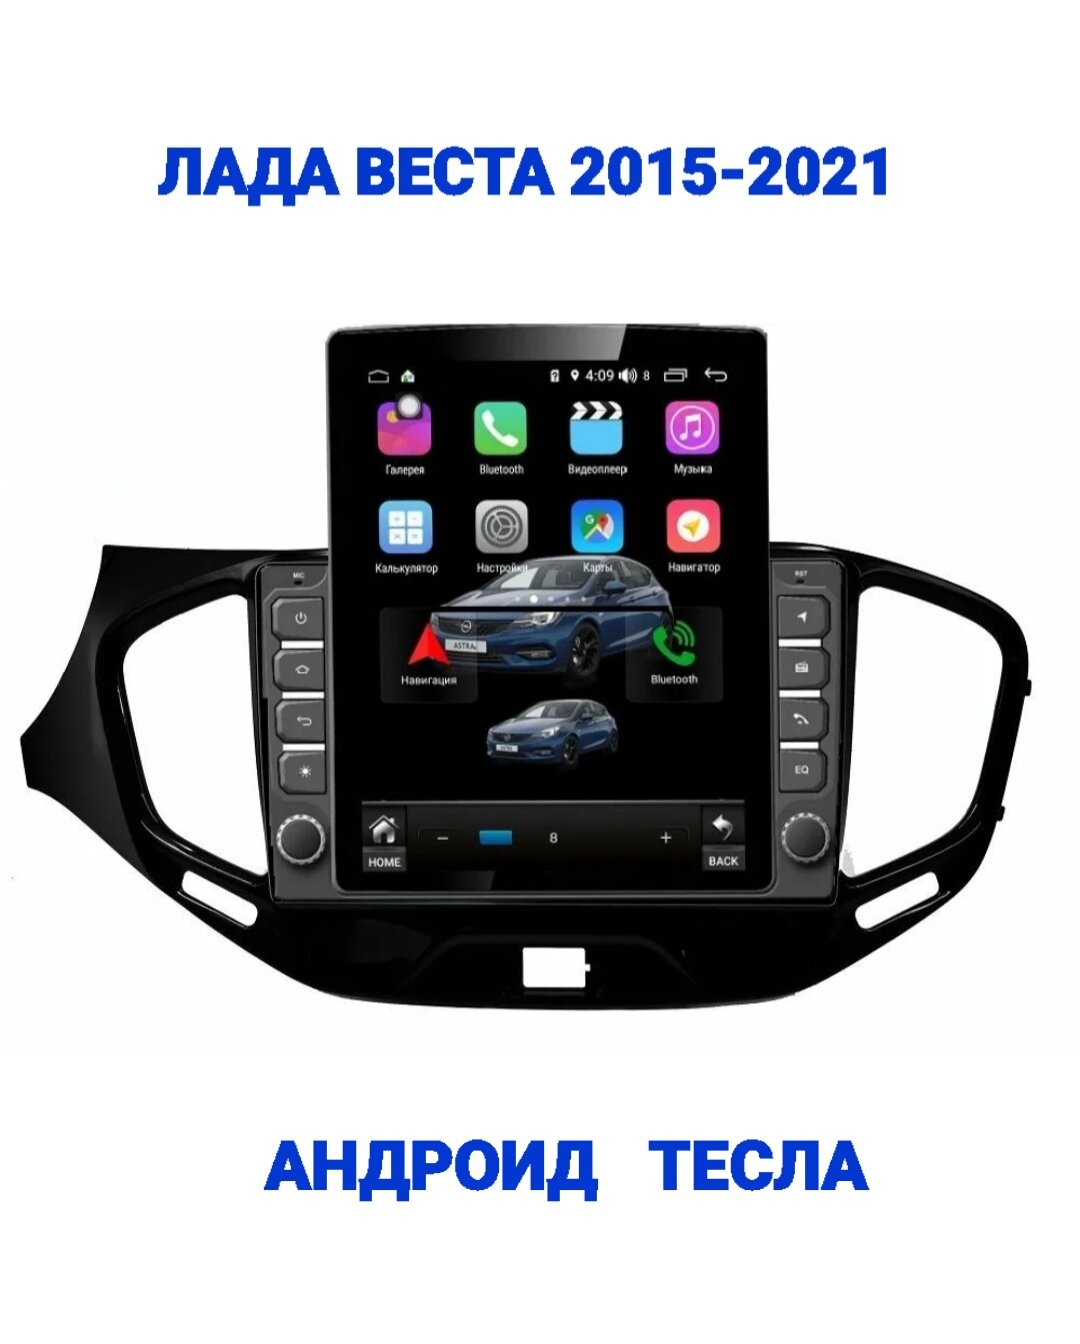 Магнитола Тесла (Tesla), андроид 13, WiFi, GPS, USB, Блютуз, Кулер охлаждения, для Лада Веста (Lada Vesta) 2015-2021 год